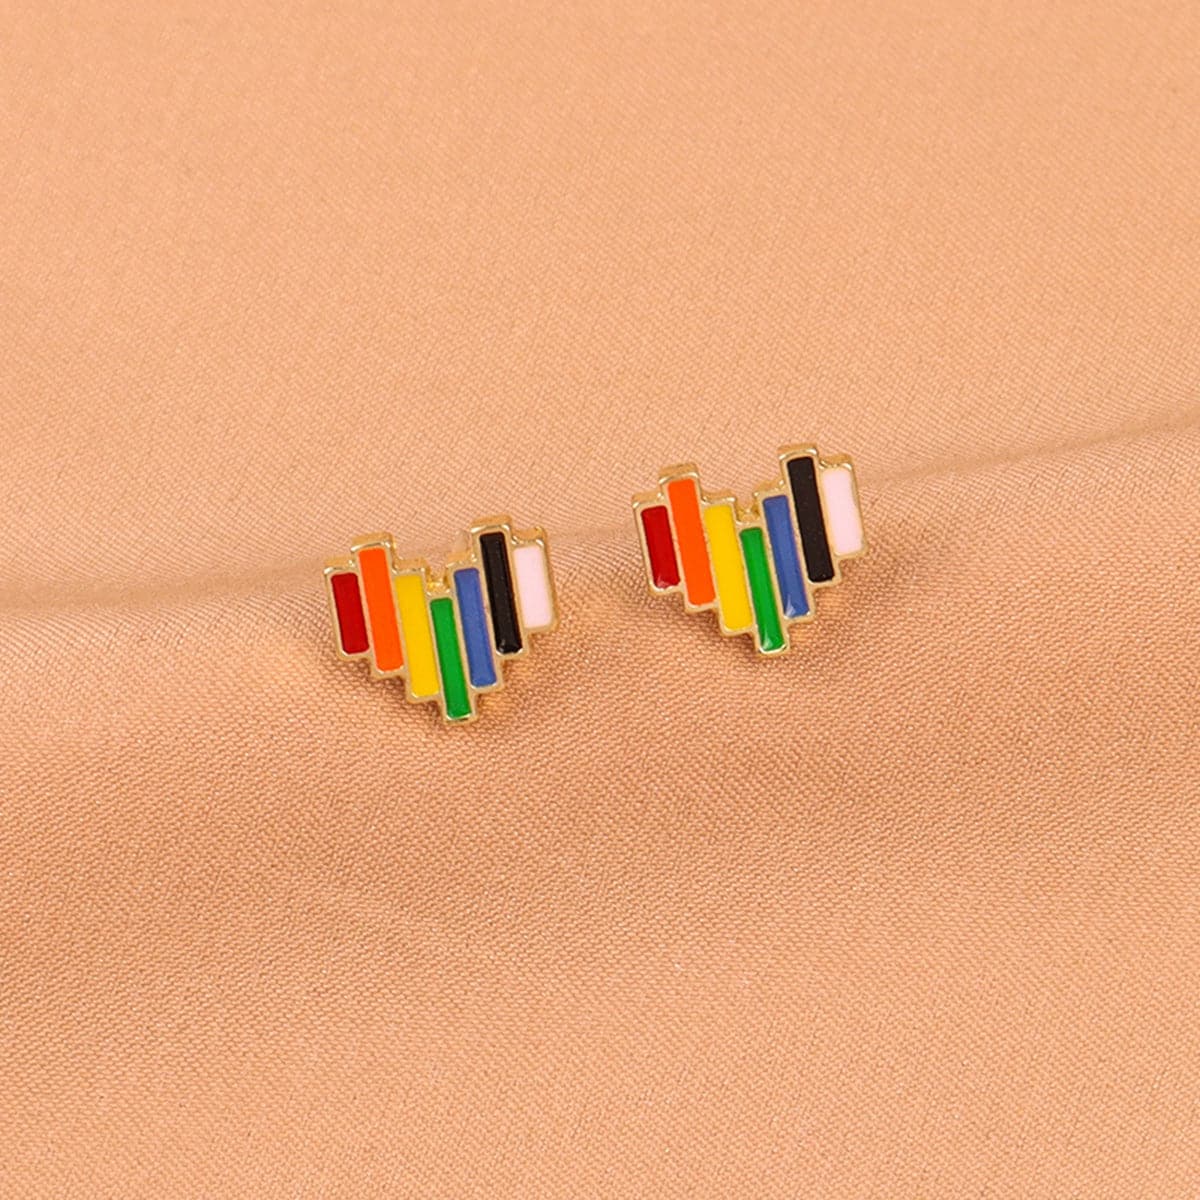 Colored Enamel & 18K Gold-Plated Rainbow Heart Stud Earrings